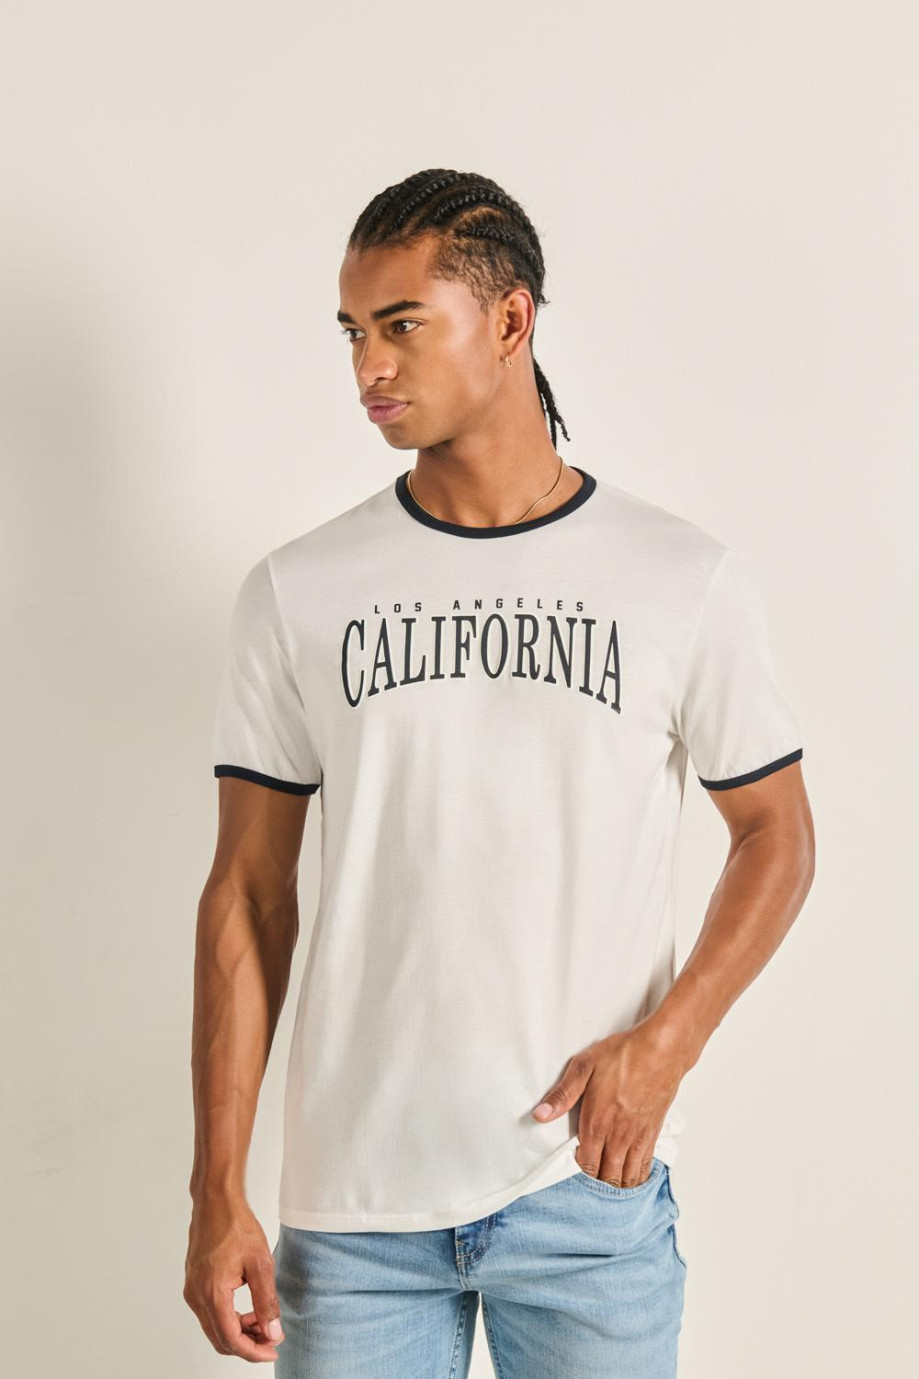 Camiseta crema manga corta con contrastes y texto college